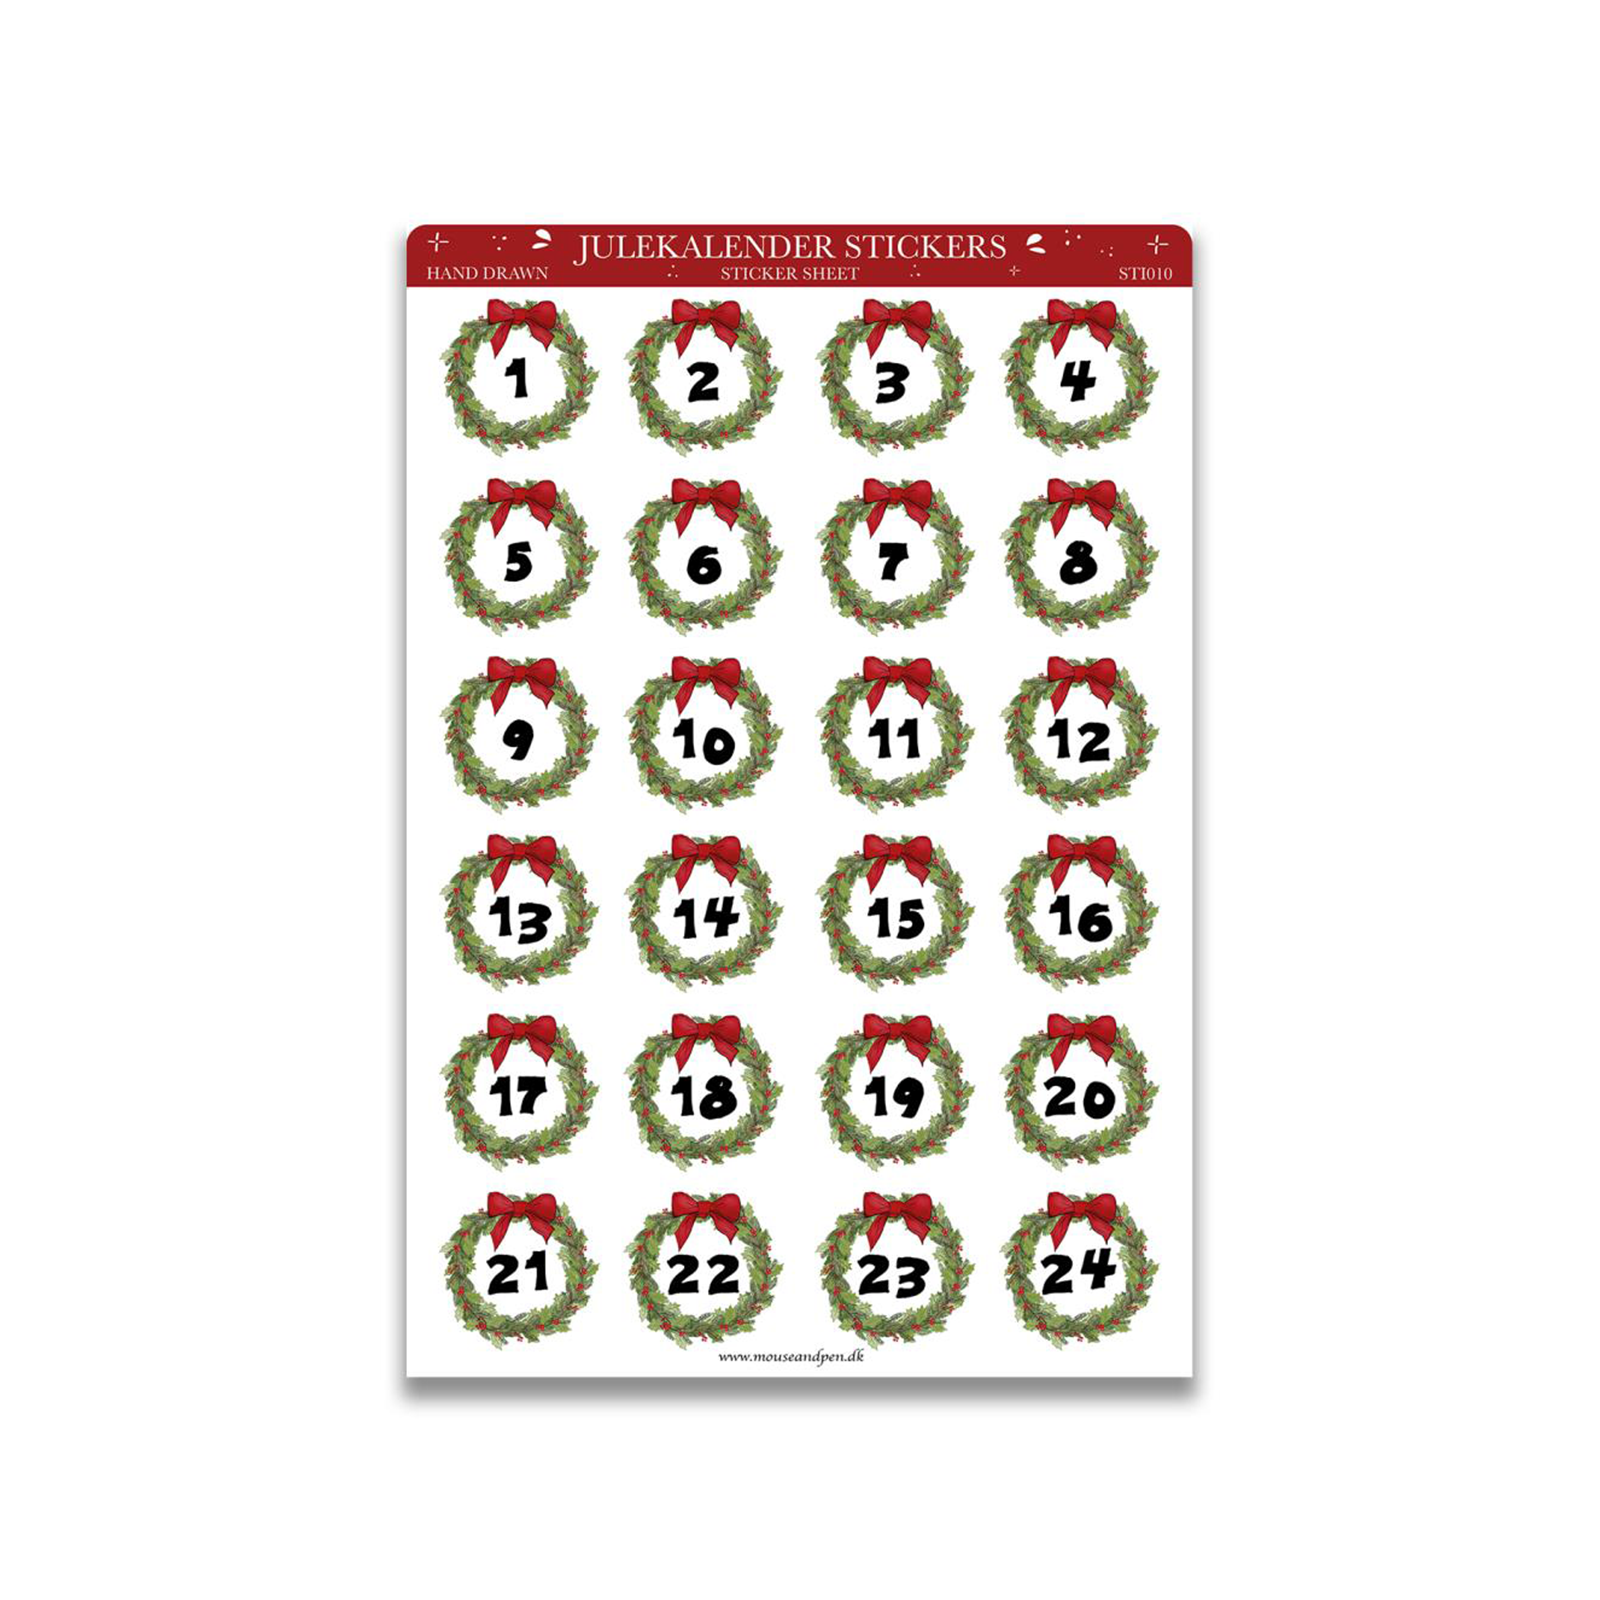 Julekalender Stickers (24 Stickers)